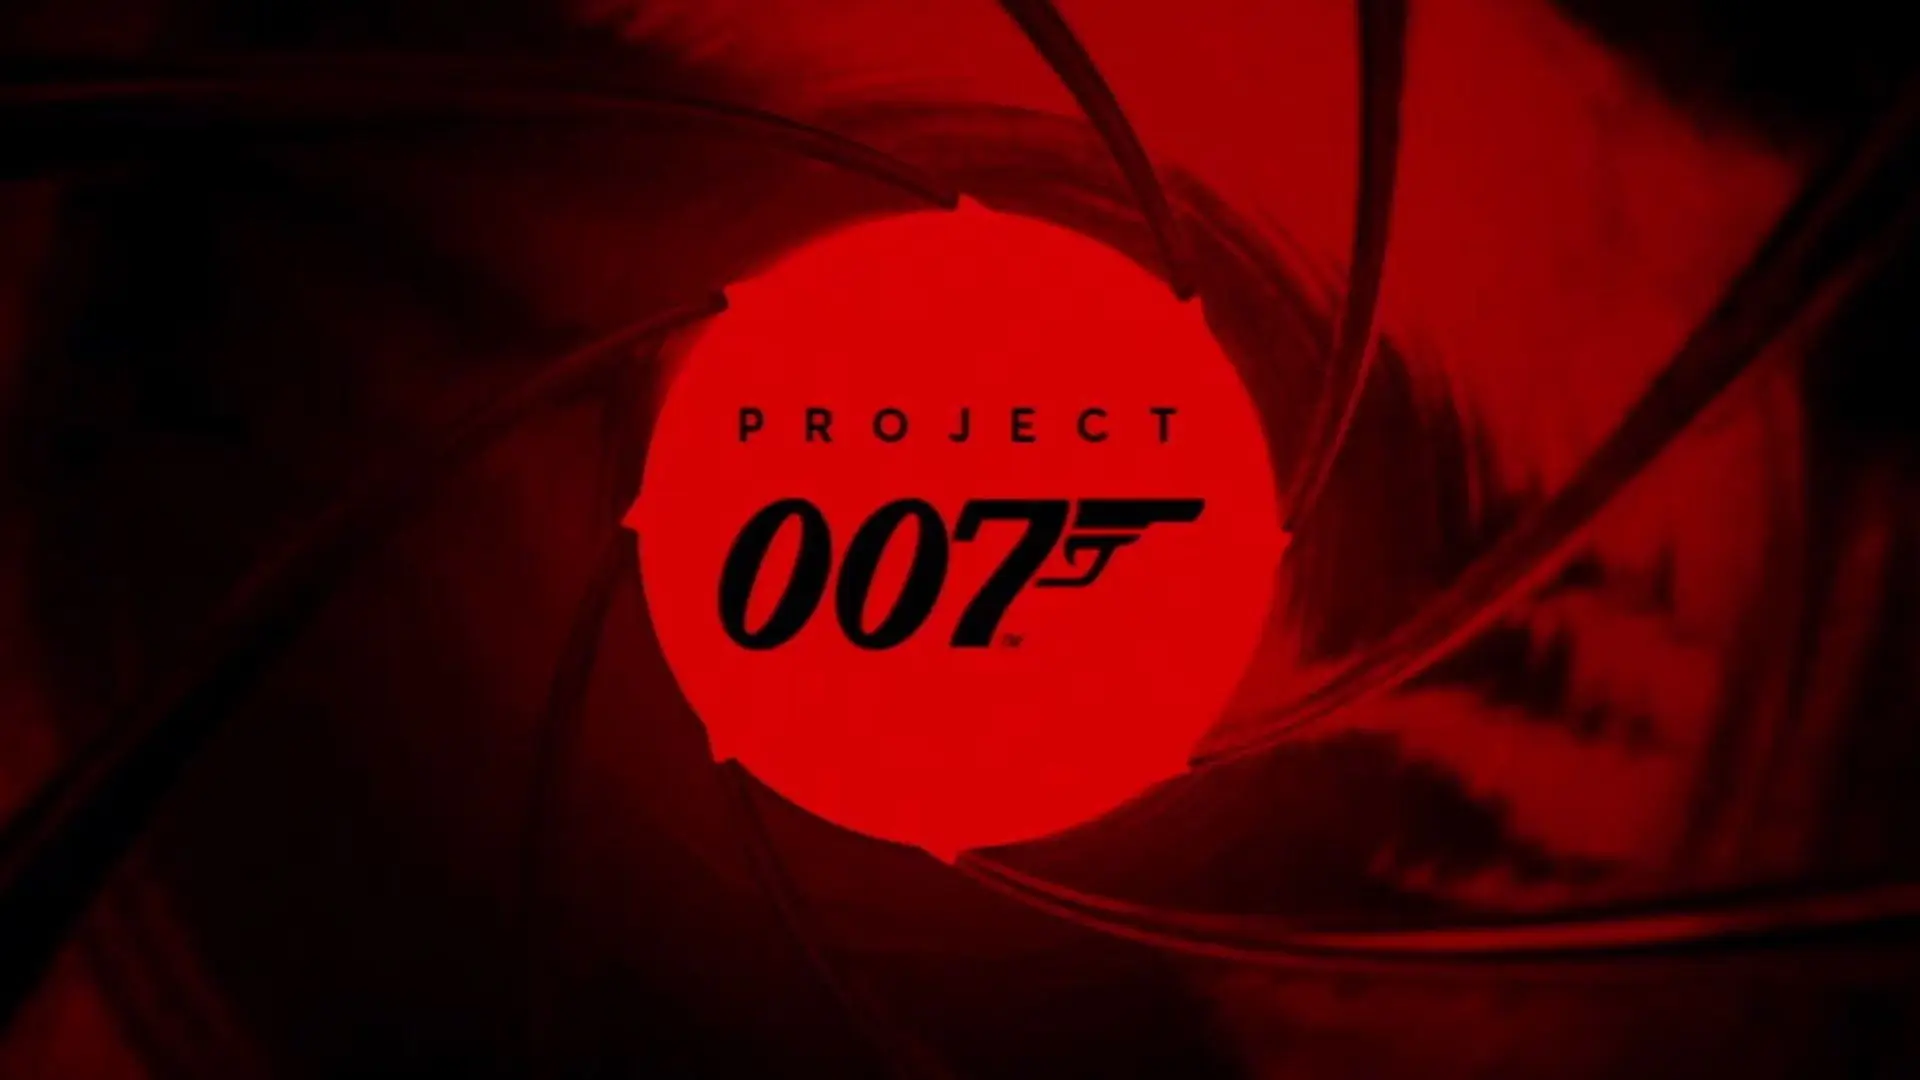 IO Interactive parece ser bastante ambicioso con Project 007